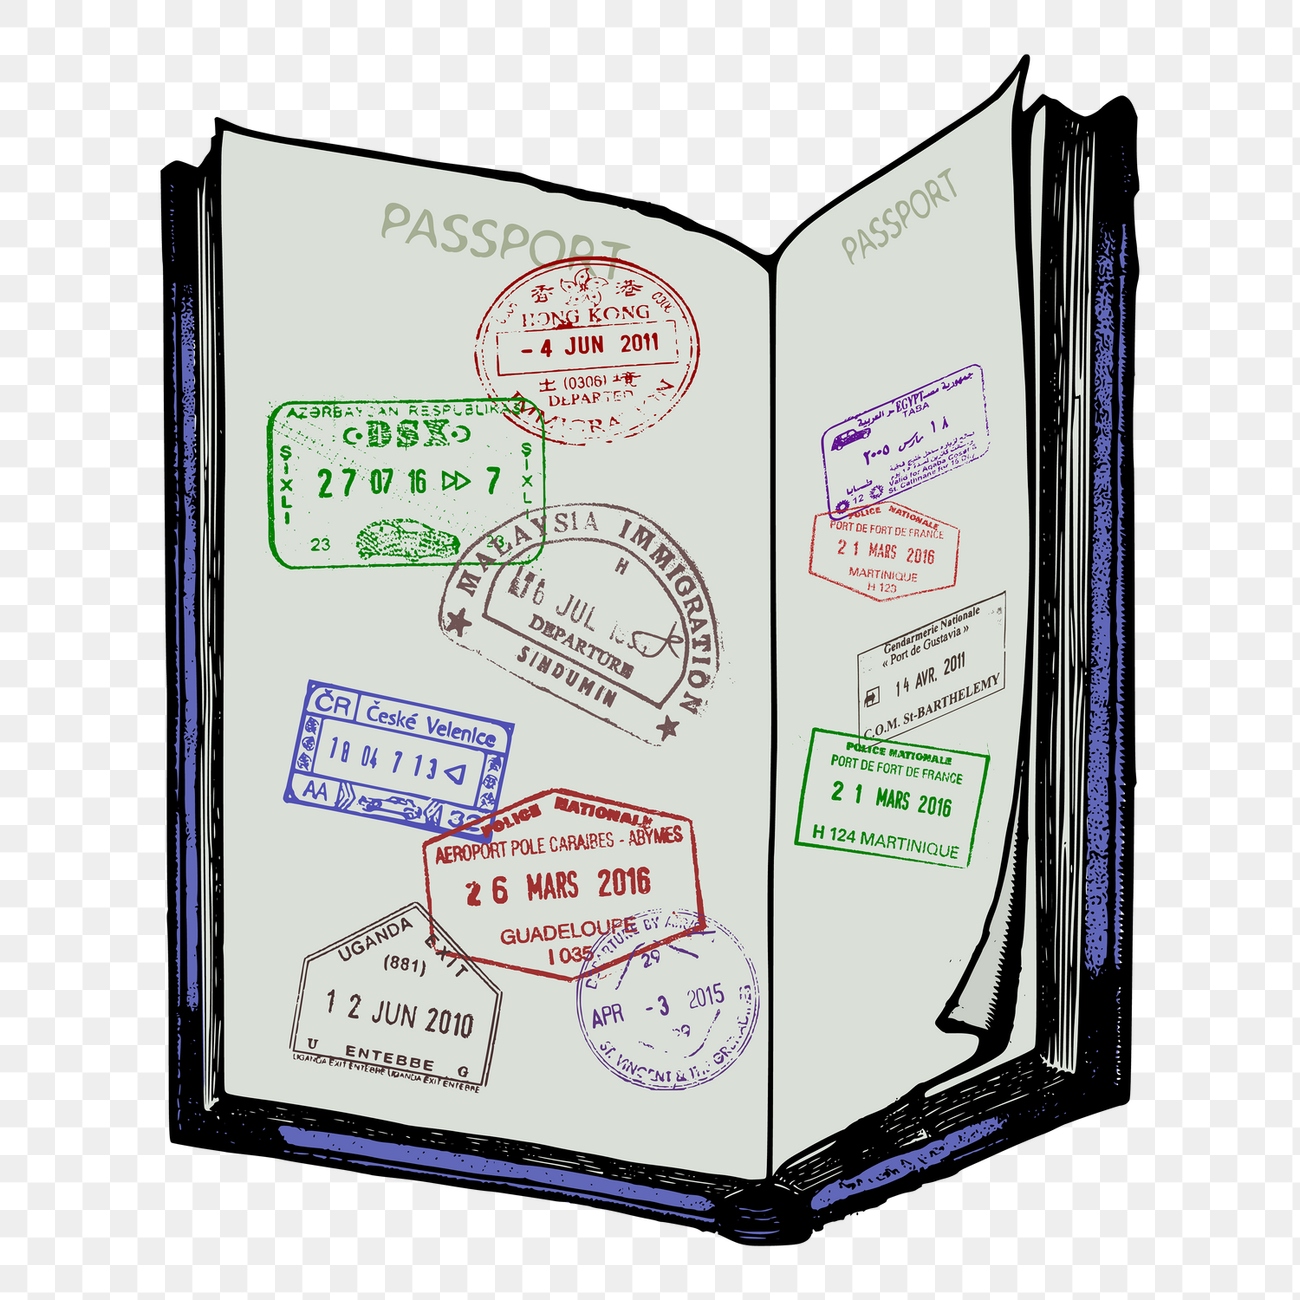 Passport stamps png sticker, travel